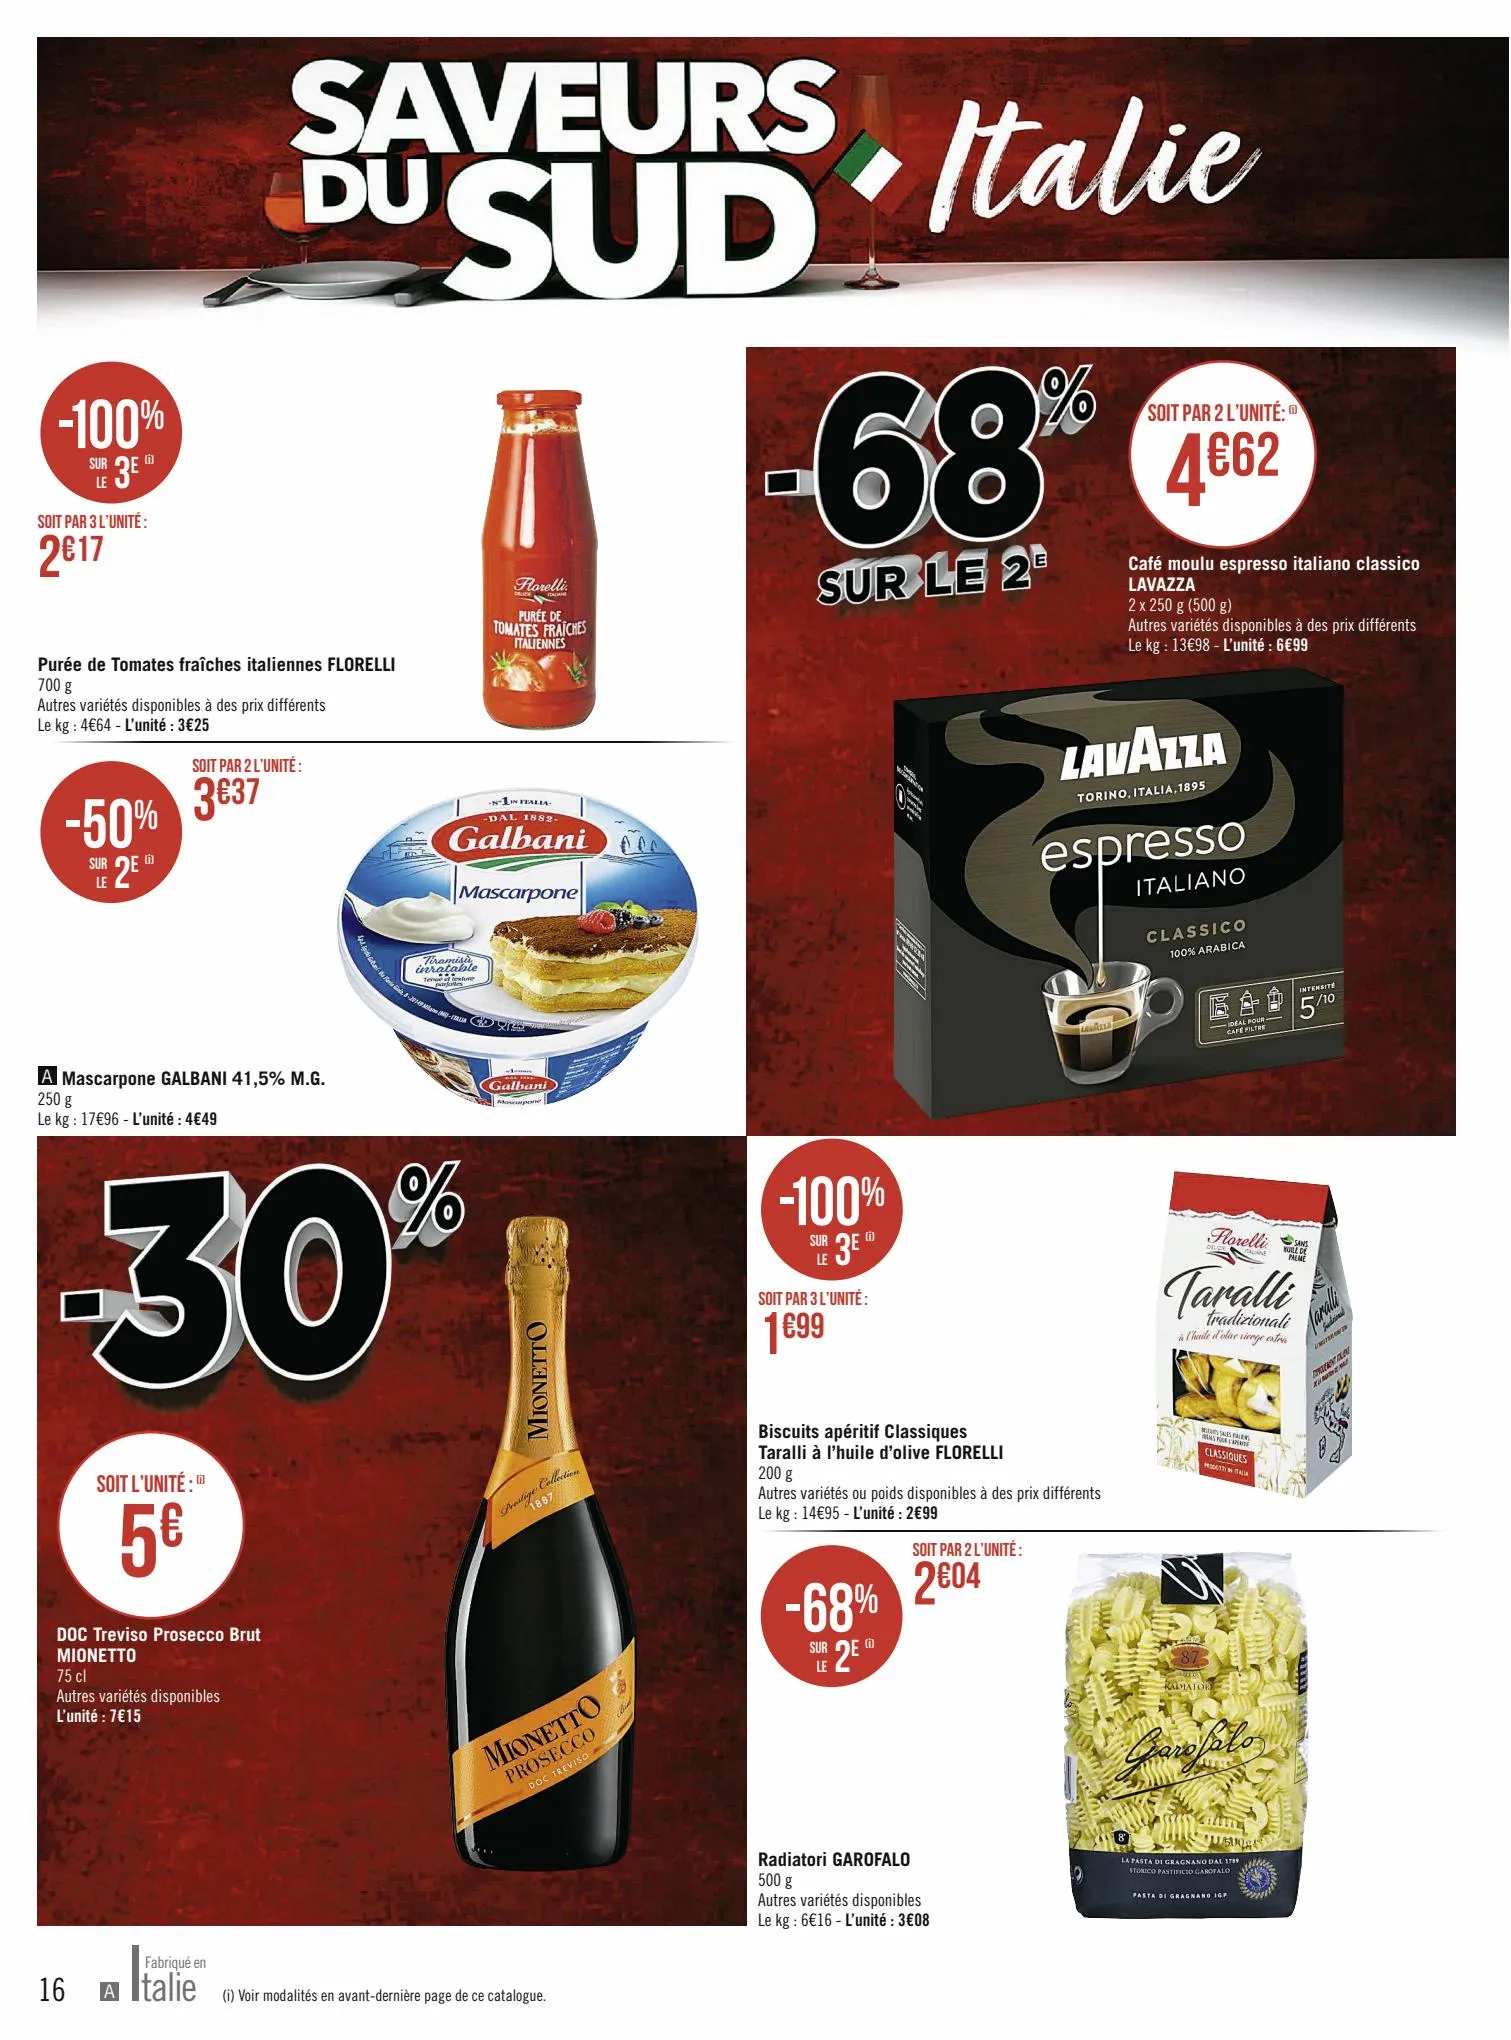 Catalogue Catalogue Casino Supermarchés, page 00016